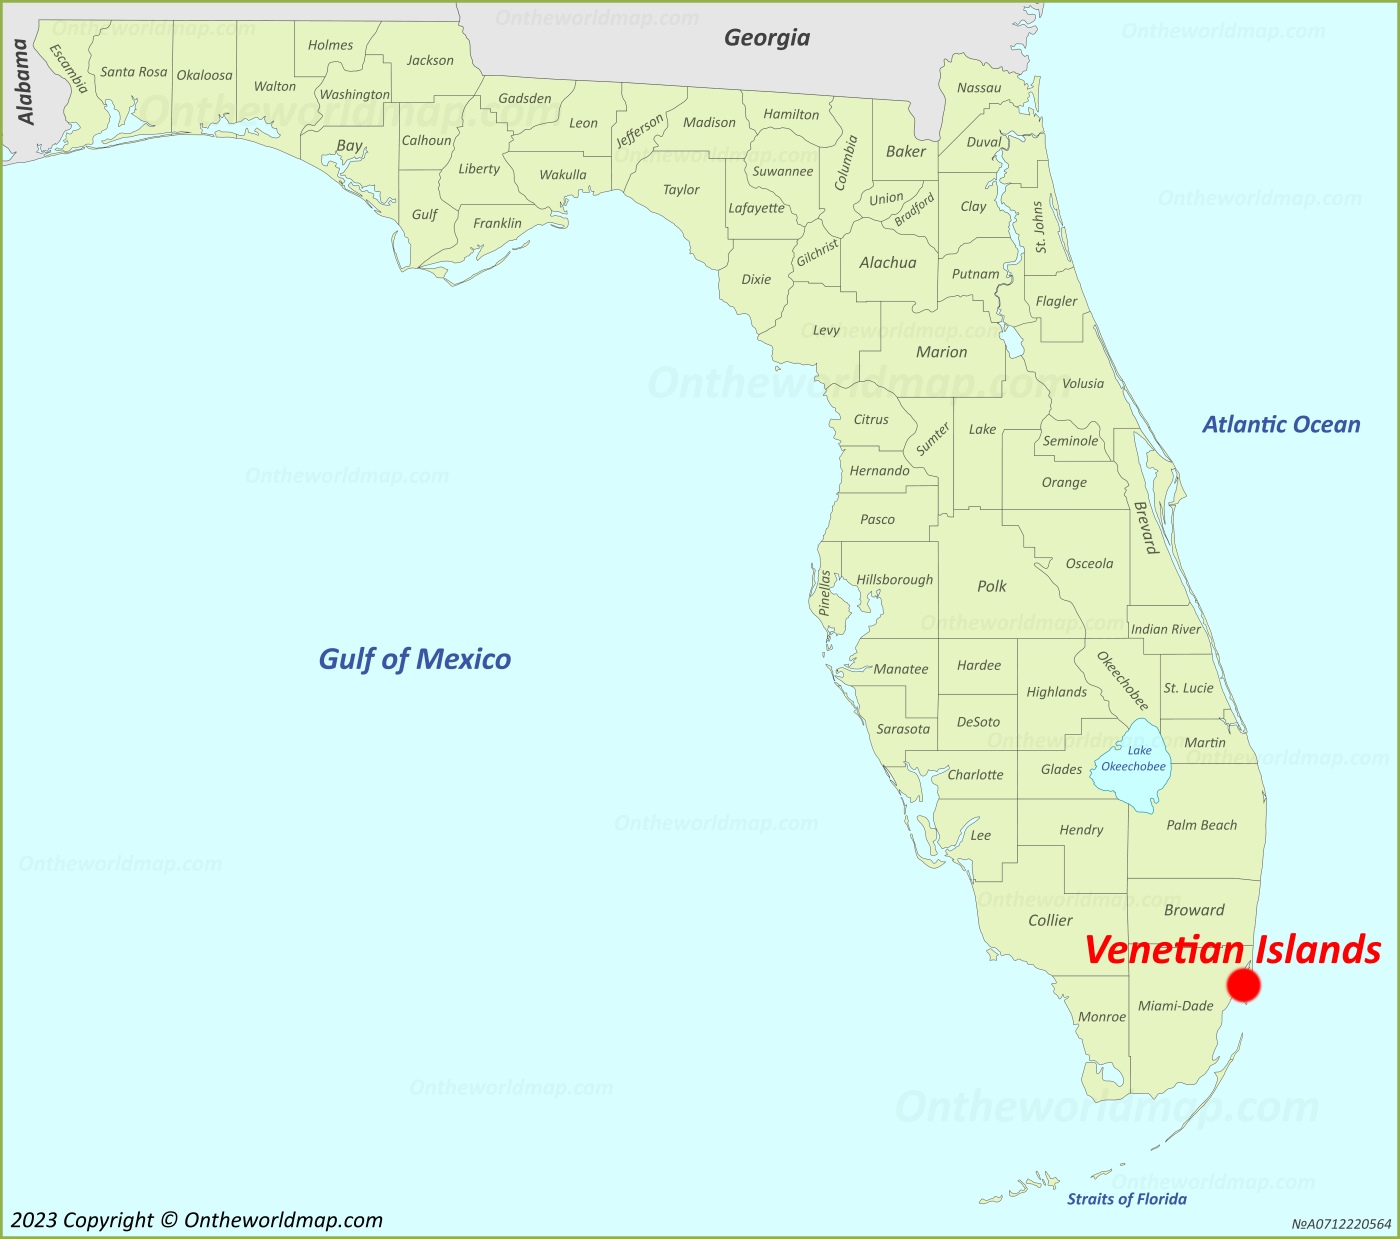 Venetian Islands Location On The Florida Map